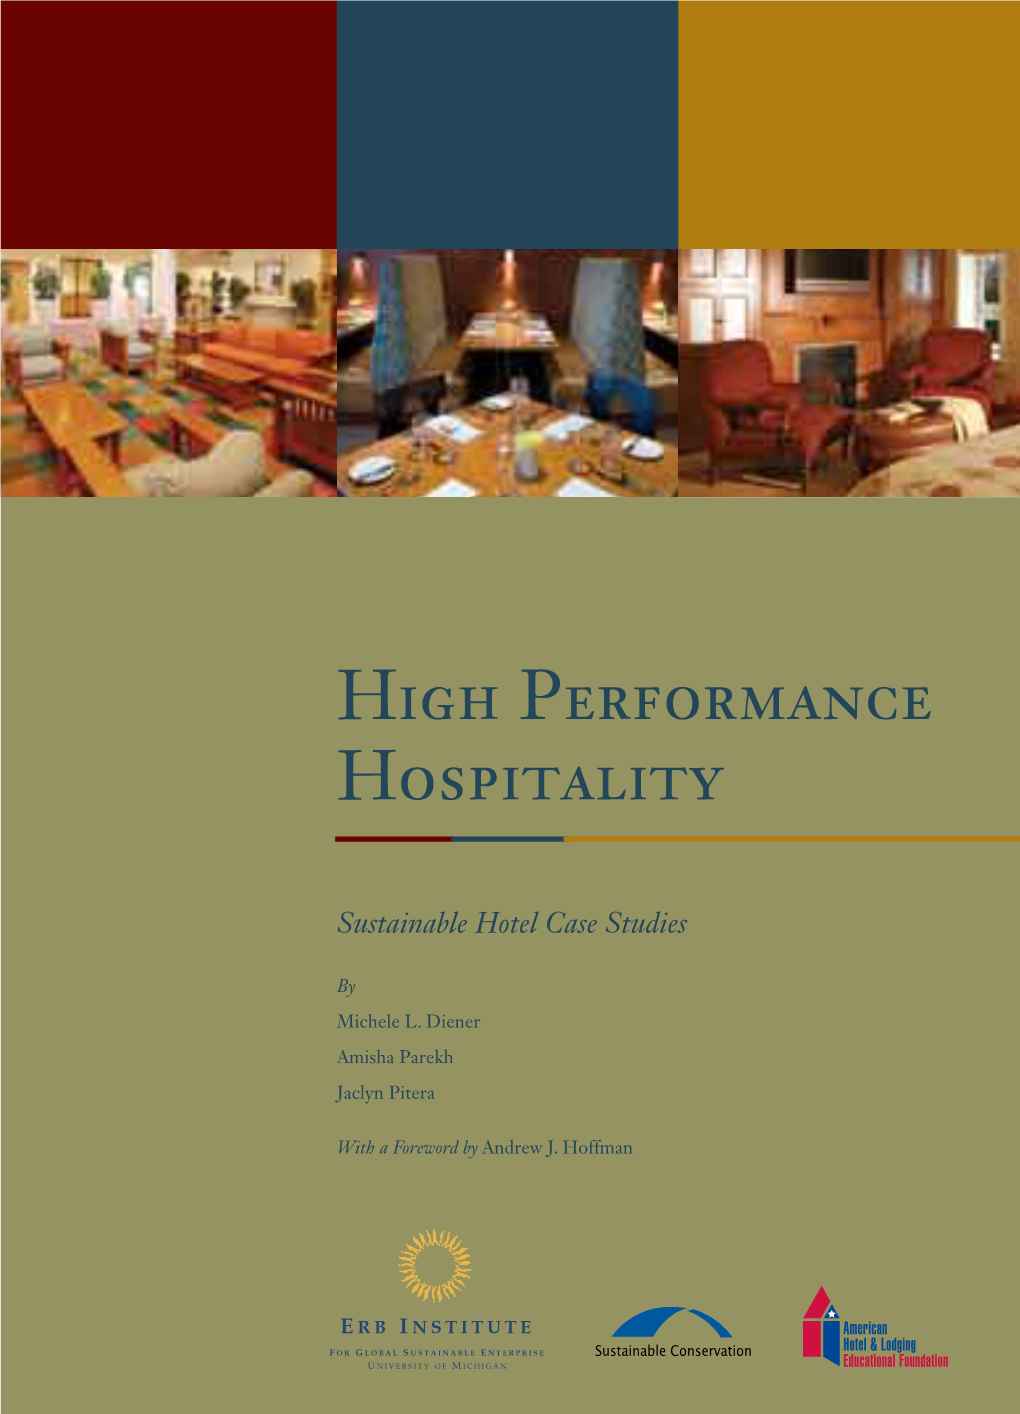 High Performance Hospitality